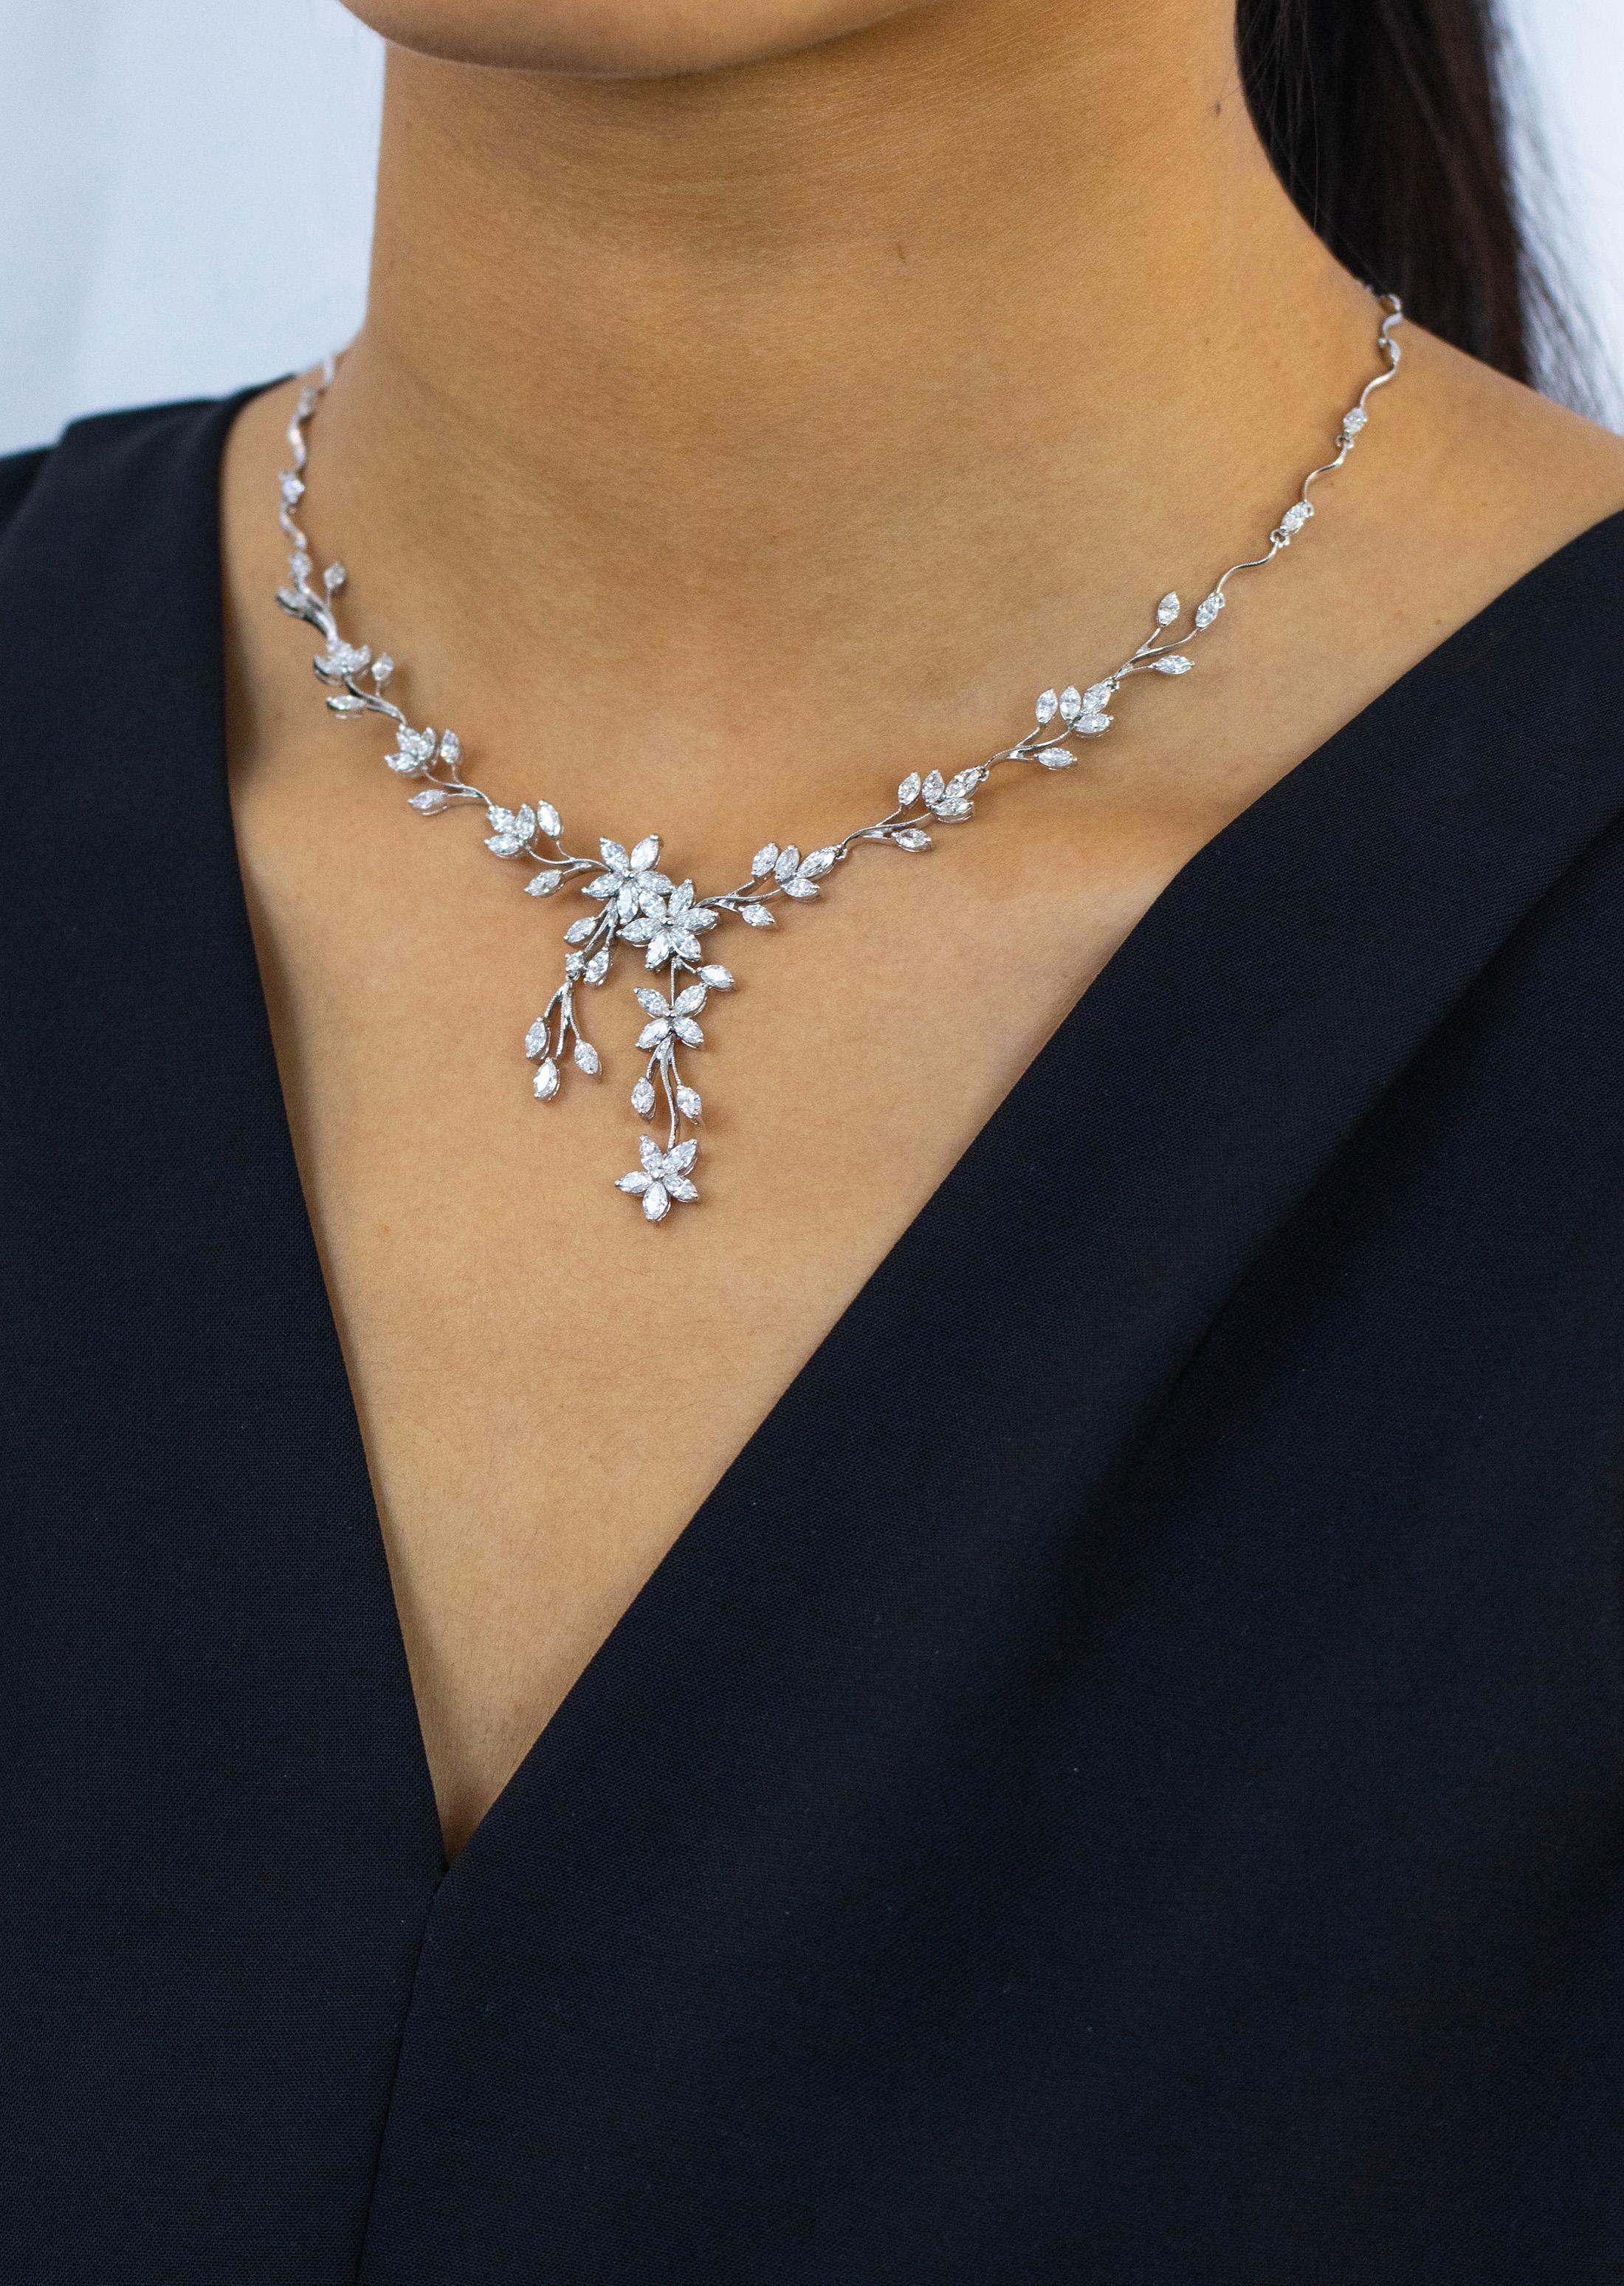 Roman Malakov Floral Motif 7.03 Carats Total Marquise Cut Diamond Drop Necklace For Sale 1